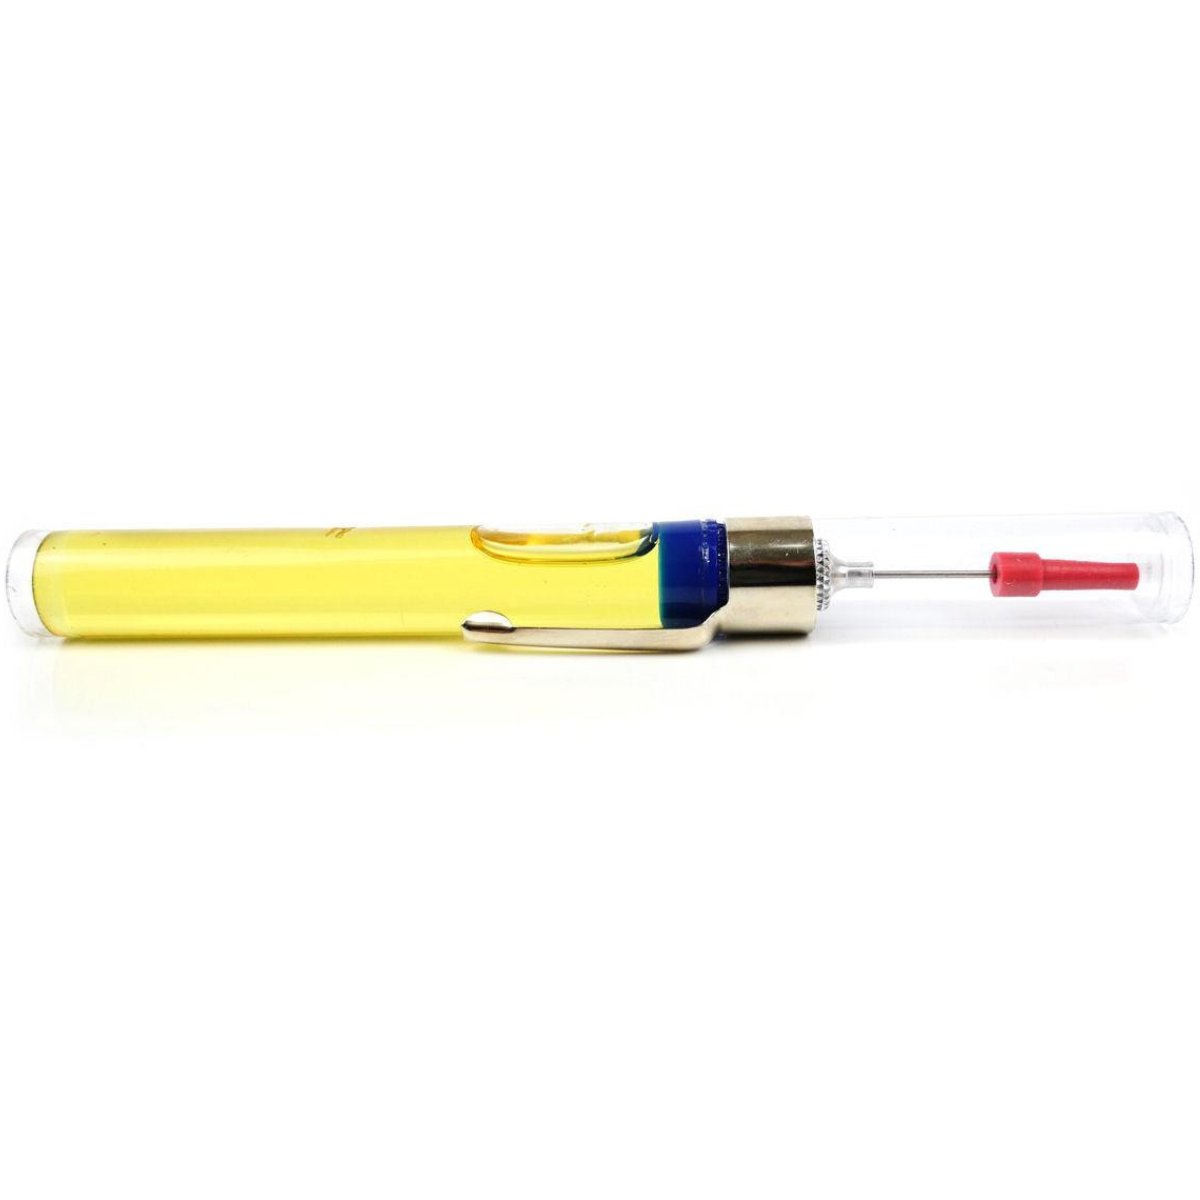 Gaugemaster Precision Lubricator With Needle Applicator (10ml) - Phillips Hobbies